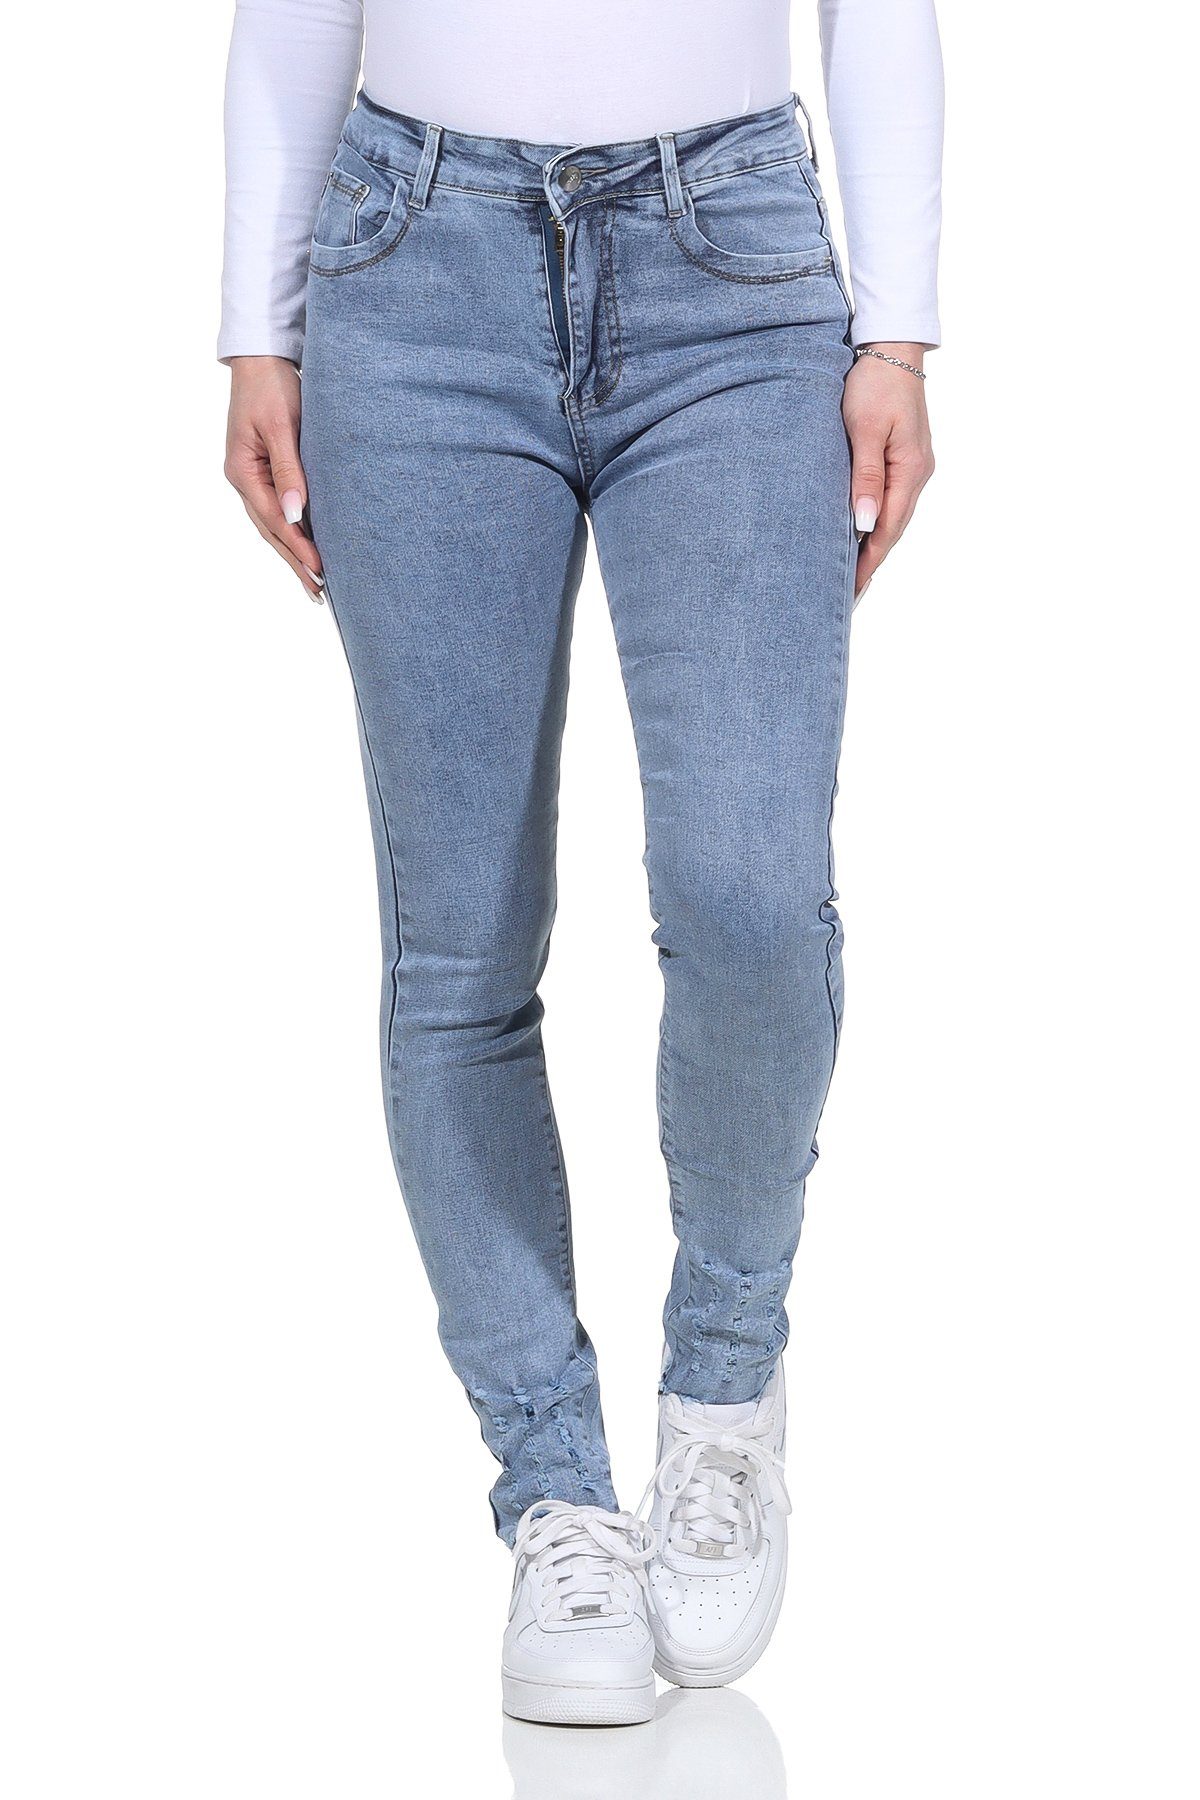 Aurela Damenmode 5-Pocket-Jeans Jeanshosen für Damen Stretch Jeans Destroyed Look moderner Distressed Look Hellblau